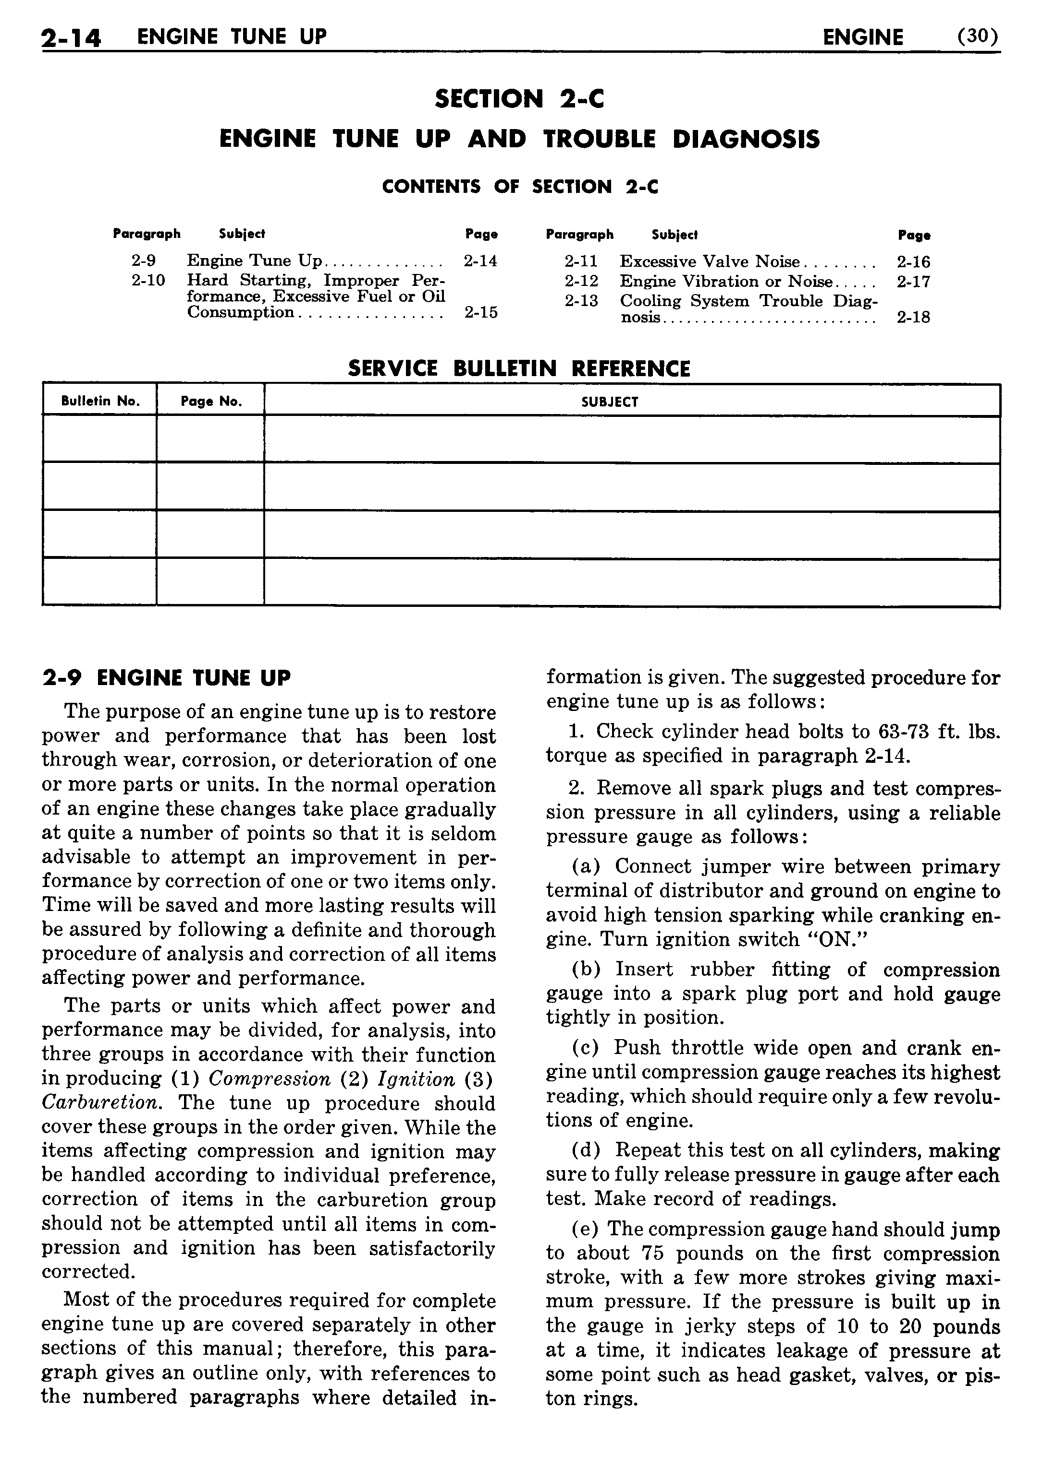 n_03 1955 Buick Shop Manual - Engine-014-014.jpg